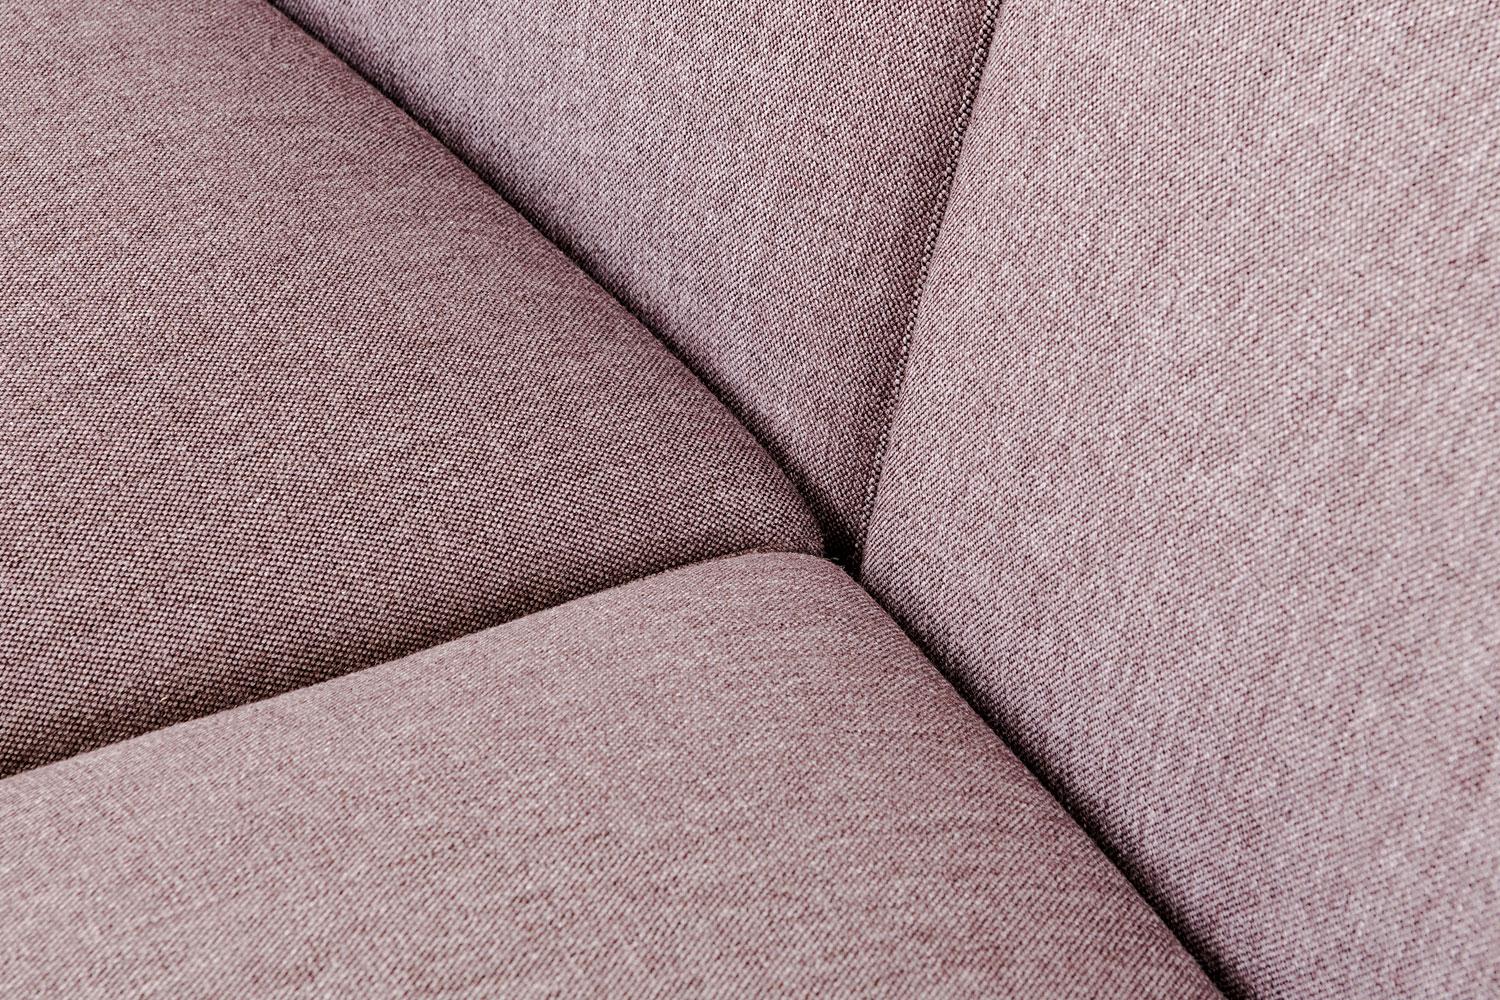 Modern Aubergine Upholstered Curved Sectional Sofa, Bensen